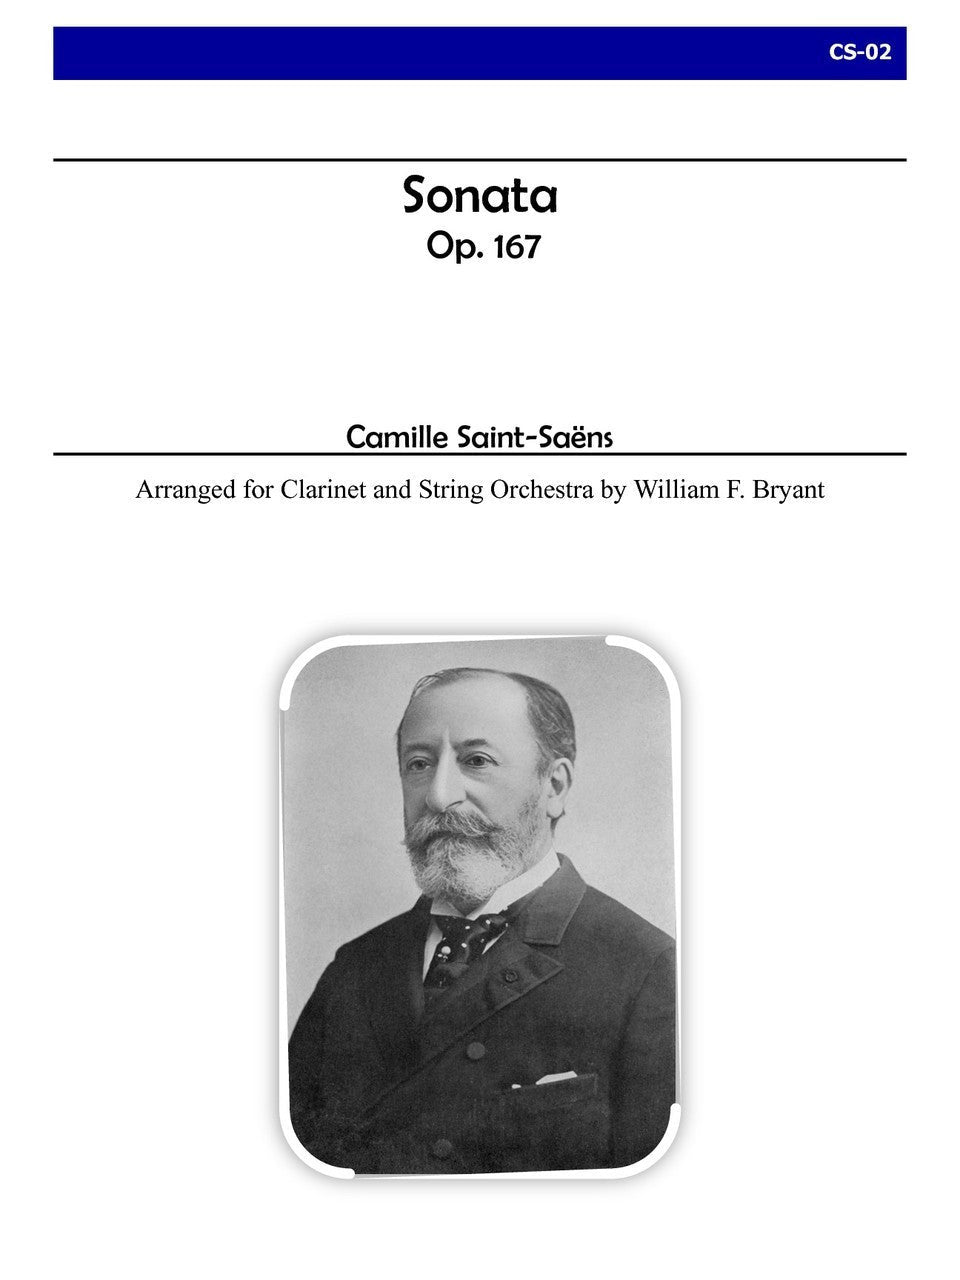 Saint-Saens - Sonata for Clarinet and String Orchestra